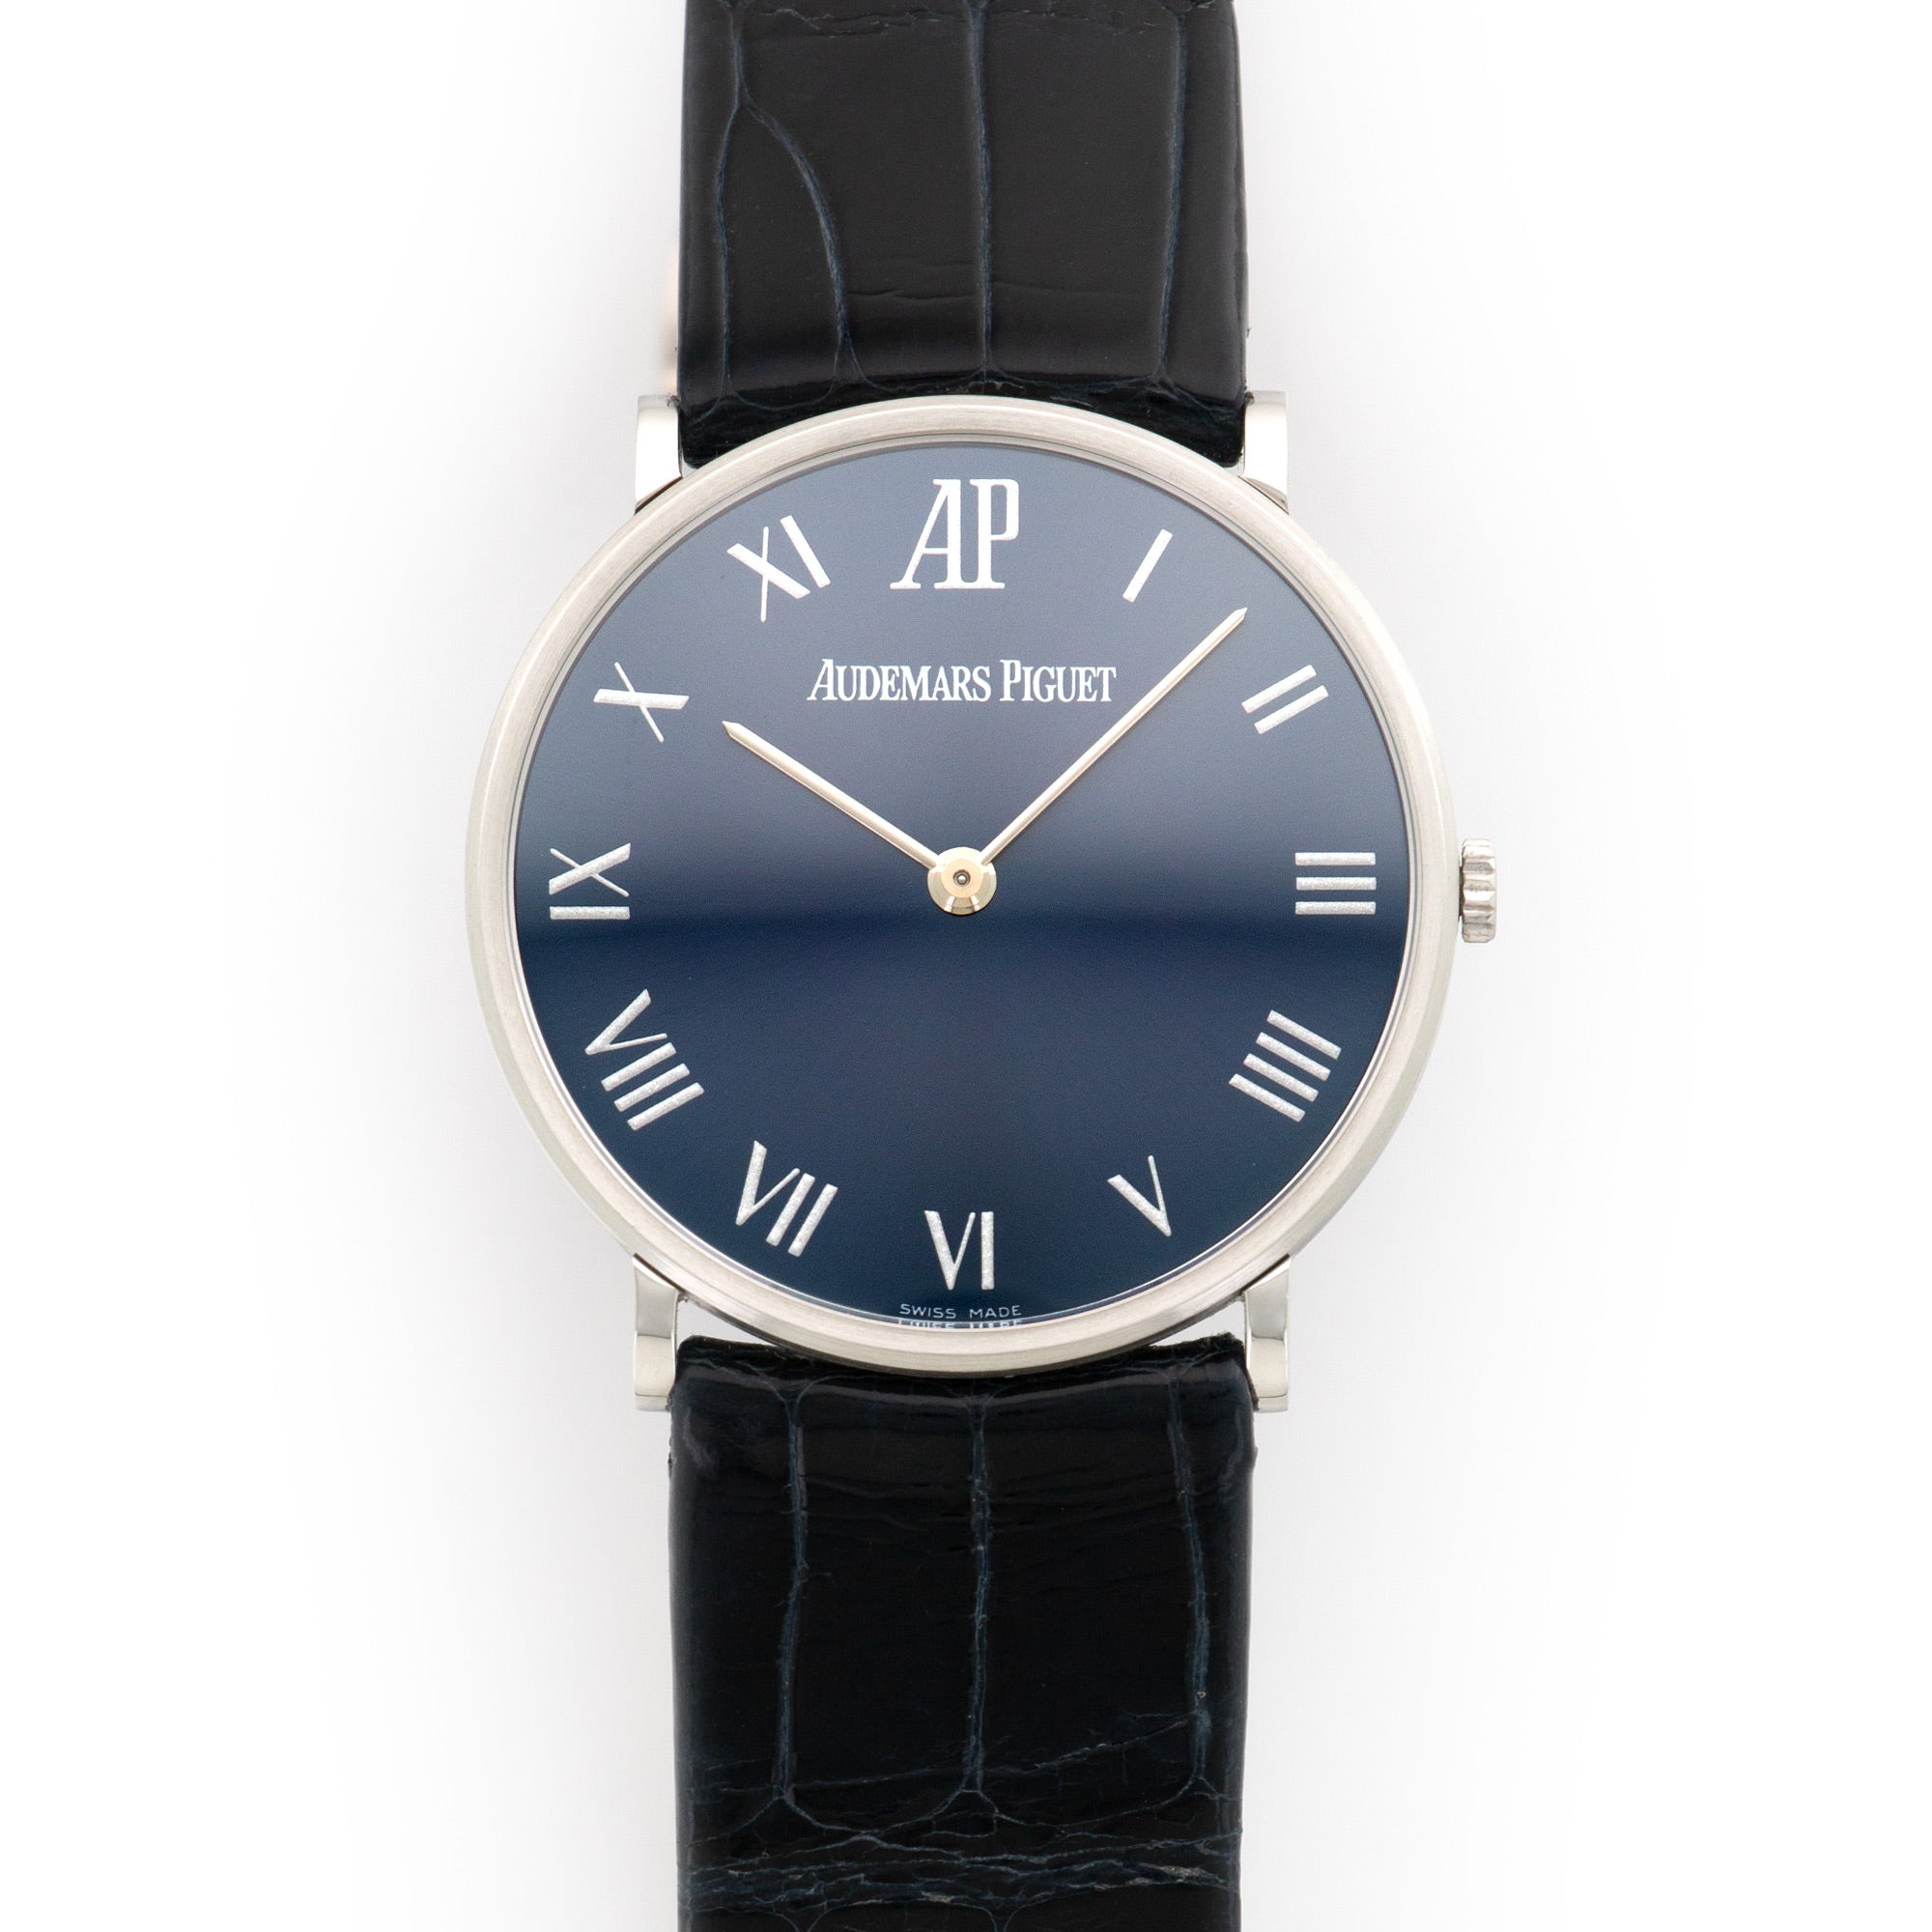 Audemars Piguet - Audemars Piguet Platinum Anniversary Edition Ultra-Thin Strap Watch - The Keystone Watches